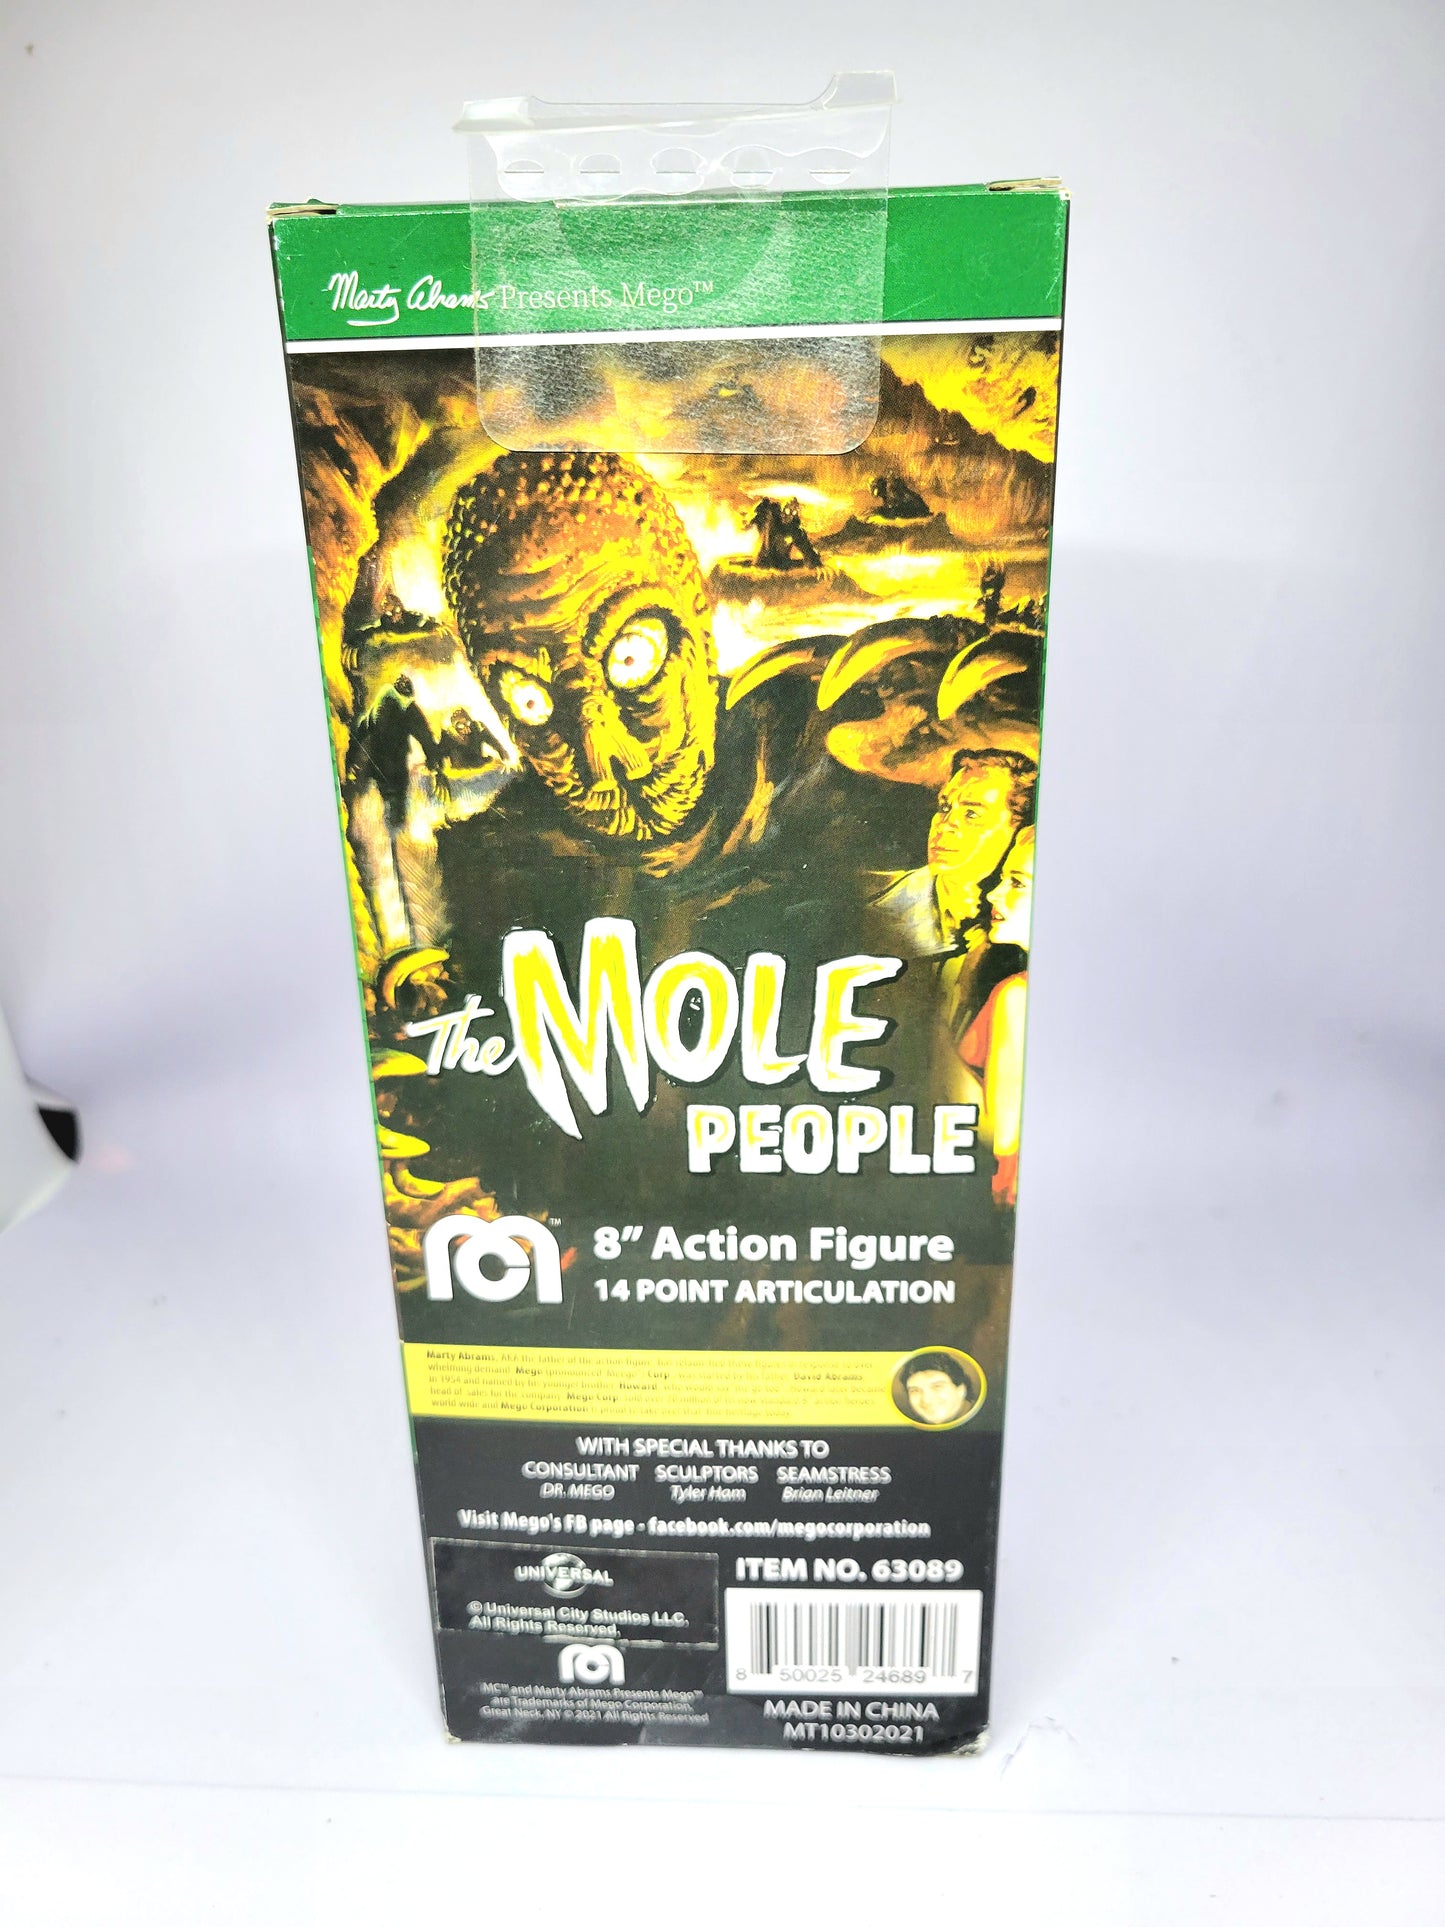 Mego The Mole People 8" Action Figure